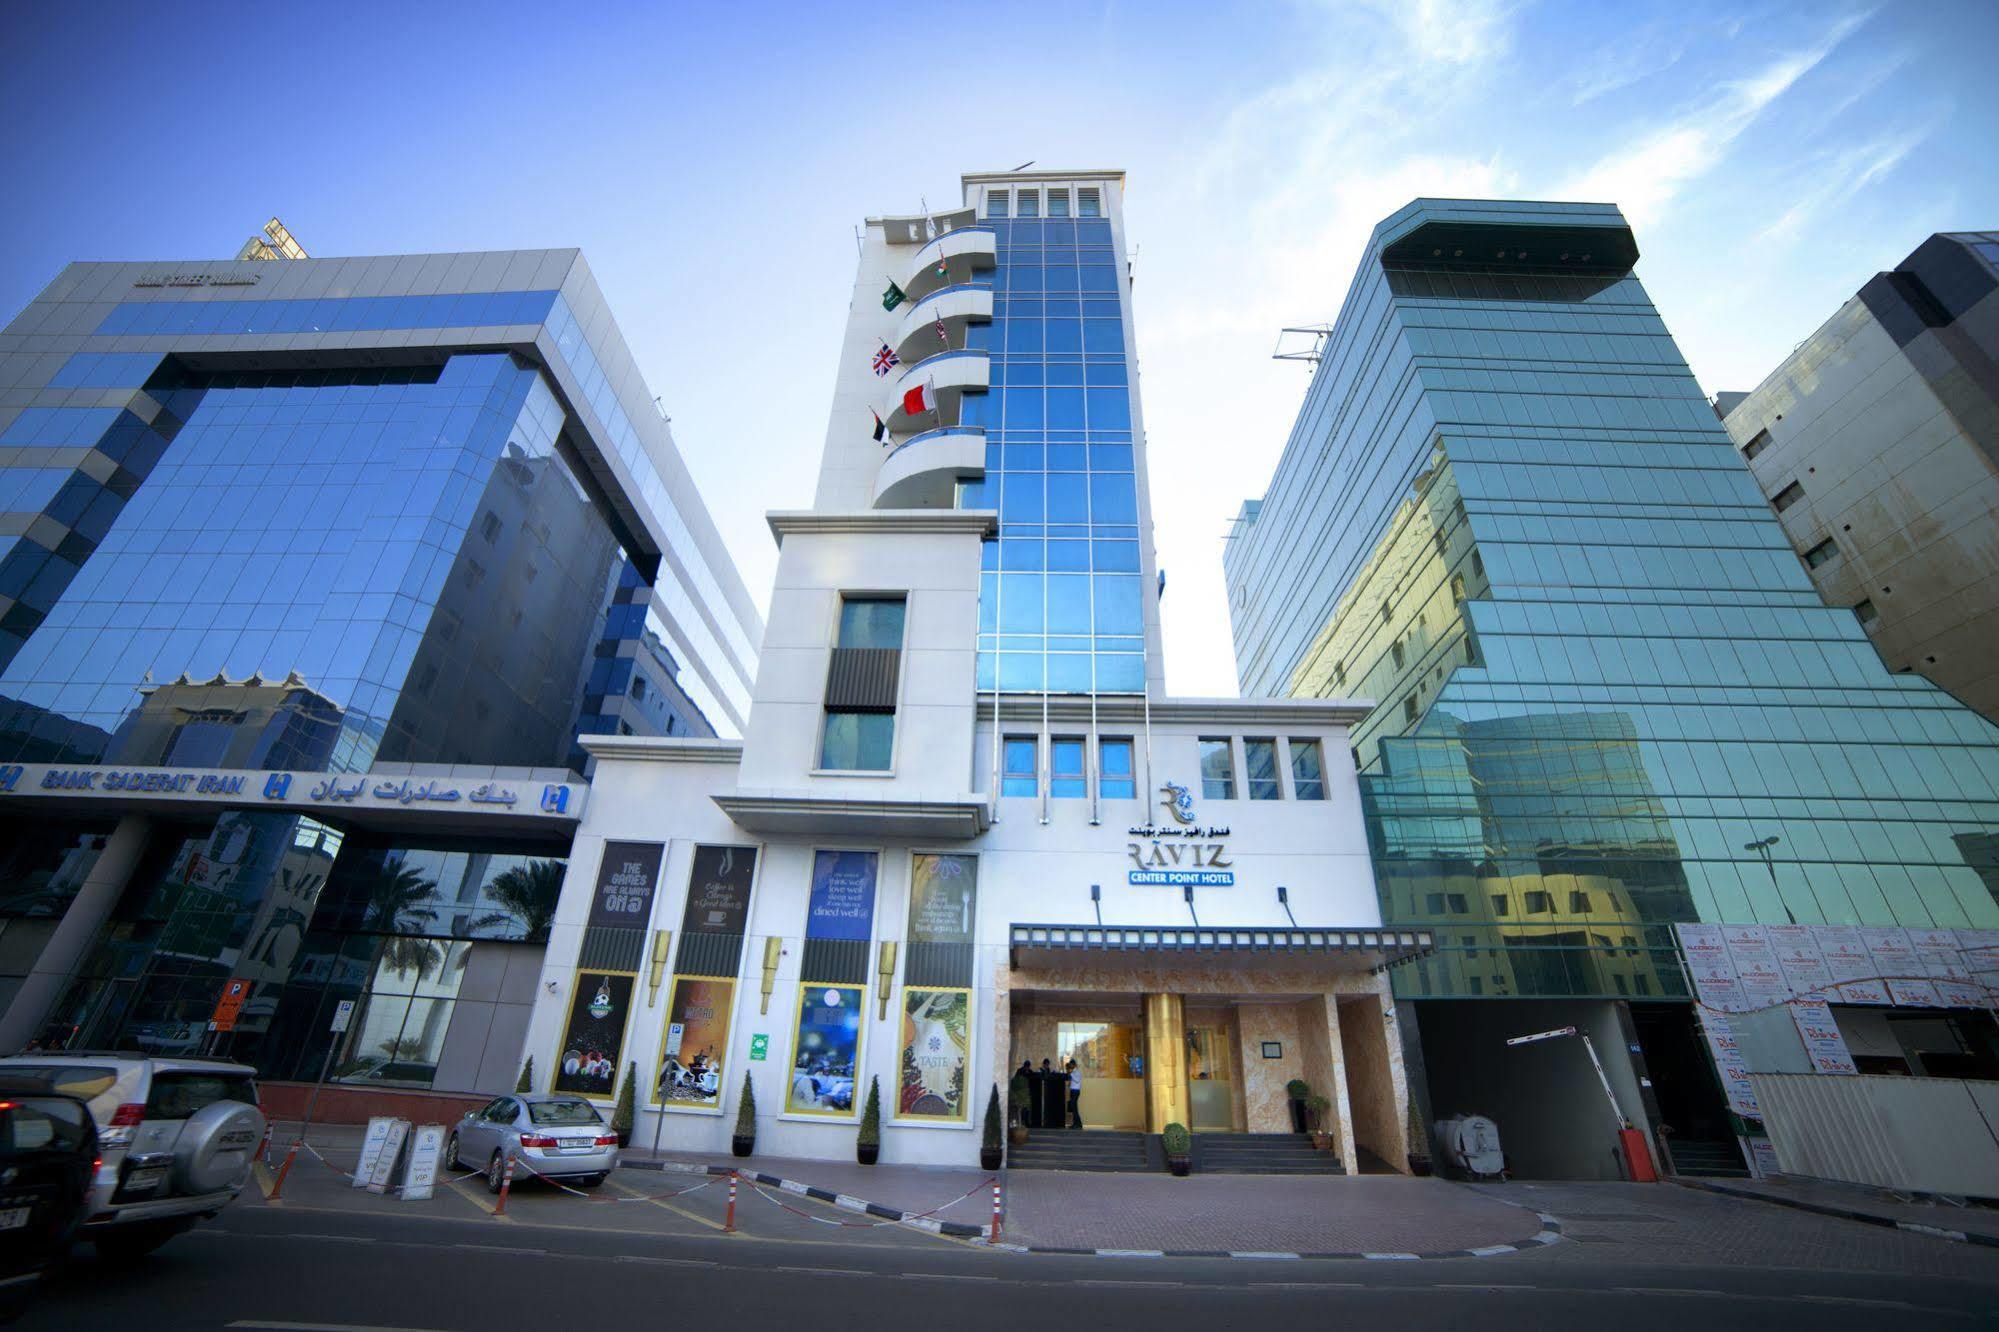 Raviz Center Point Hotel Dubái Exterior foto